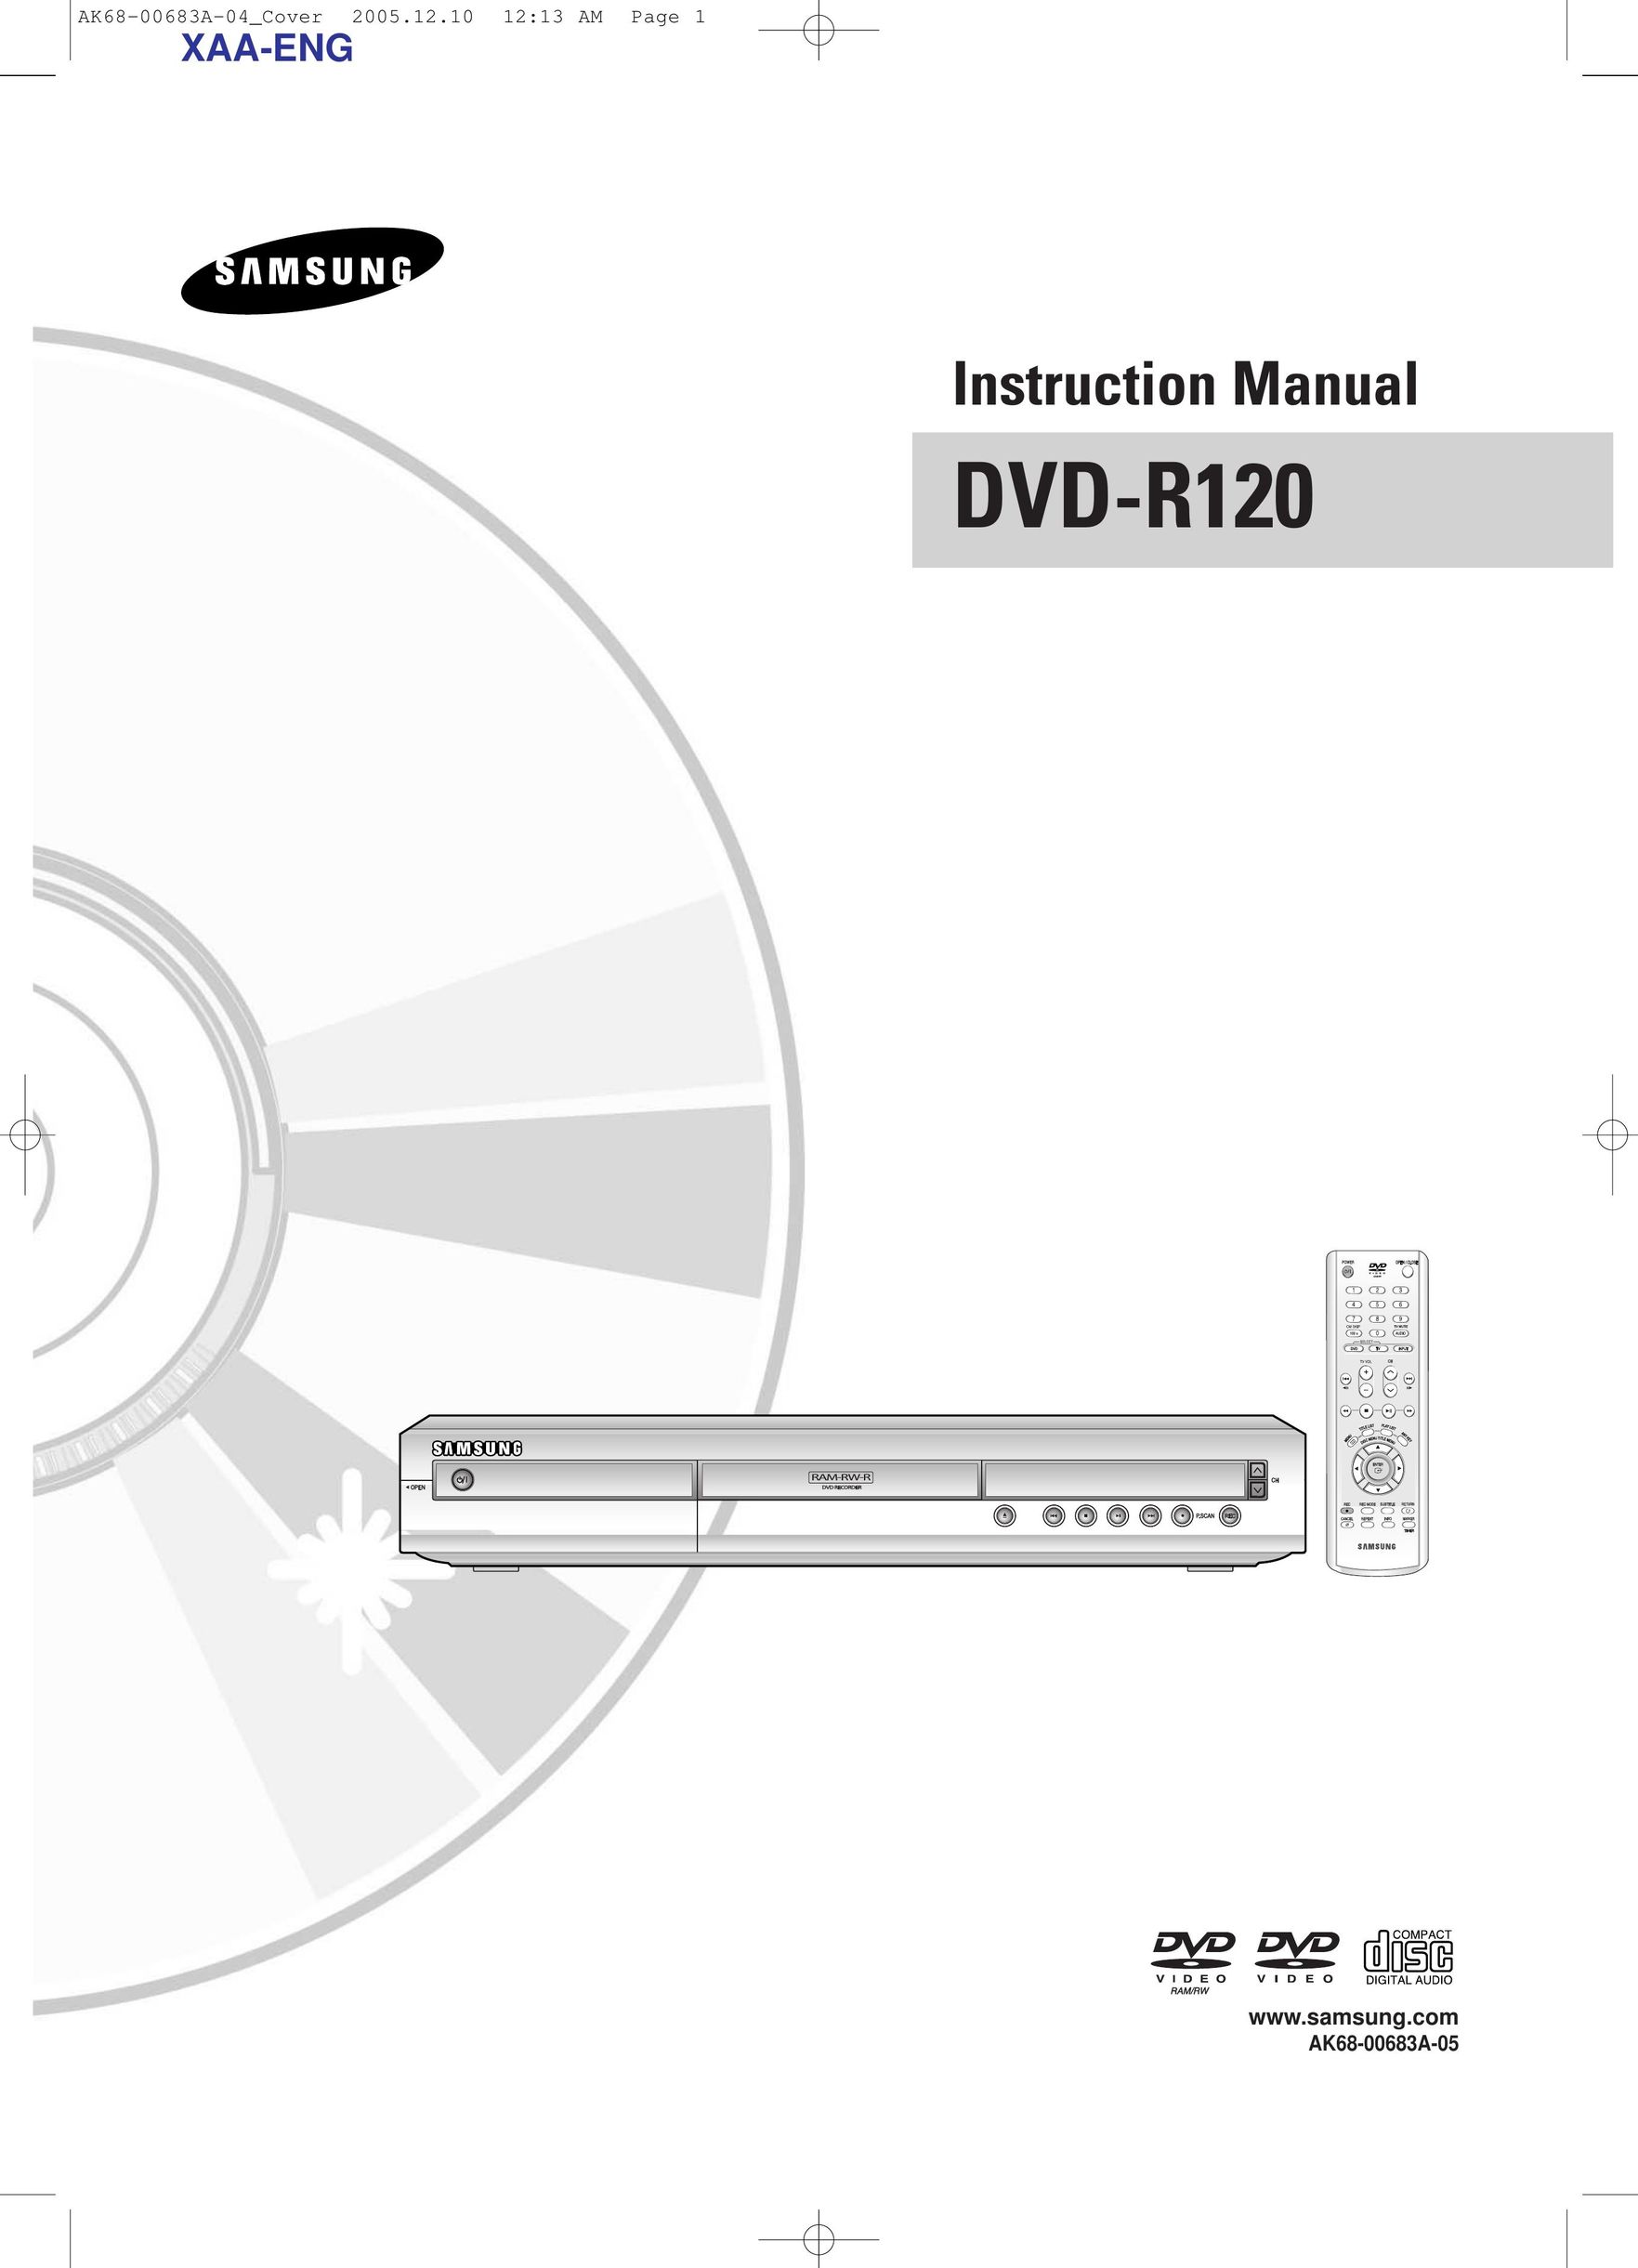 Samsung DVD-R120 DVD Recorder User Manual